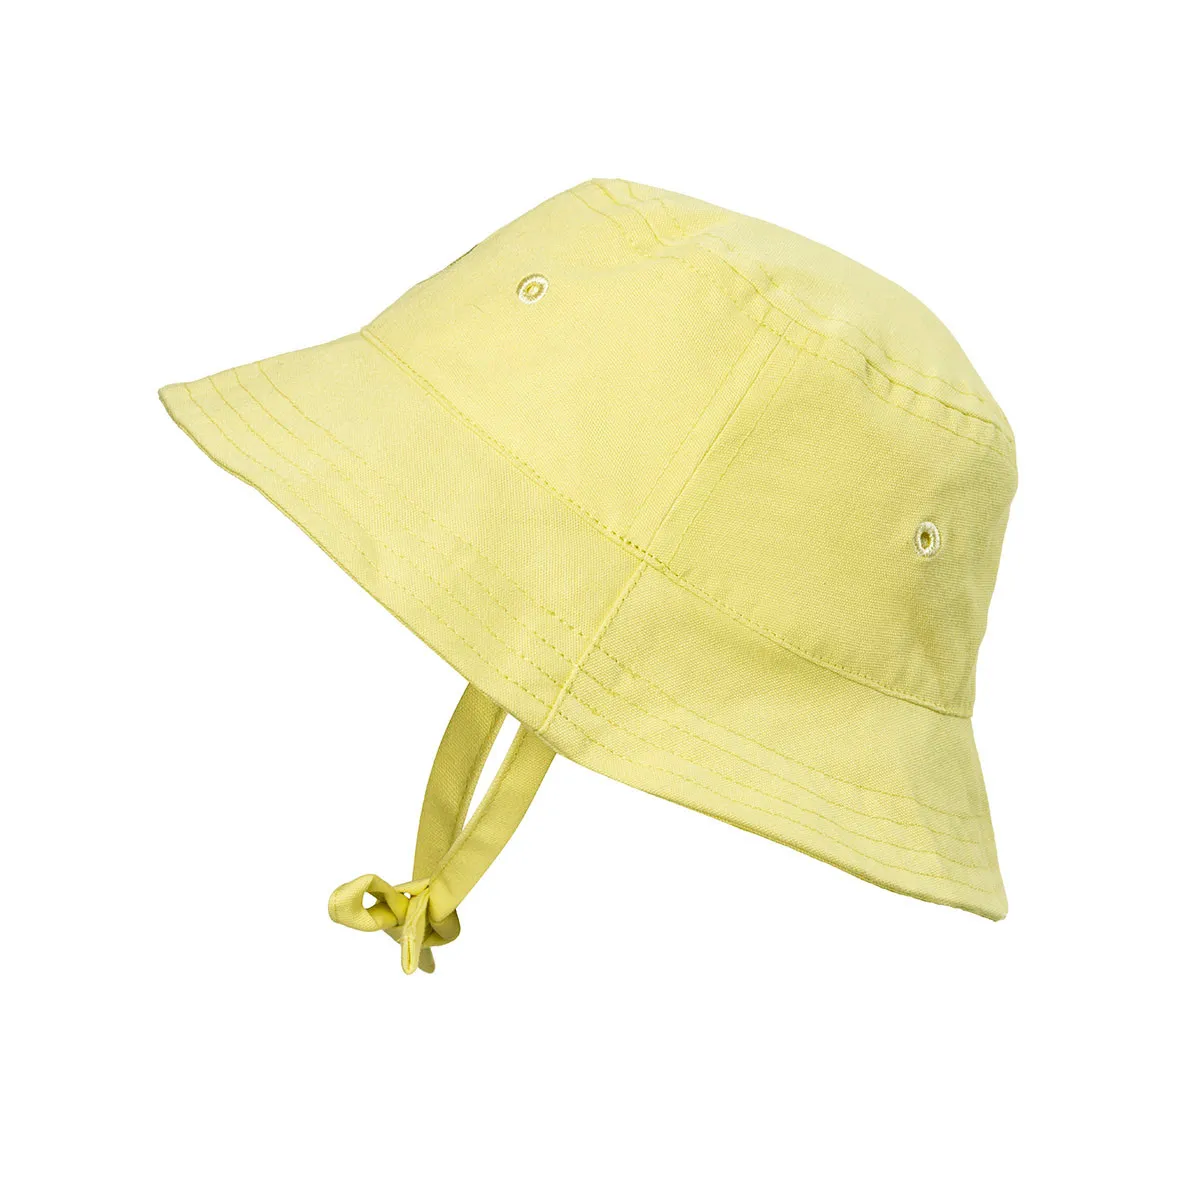 Elodie Details šešir Sunny yellow, 1-2g